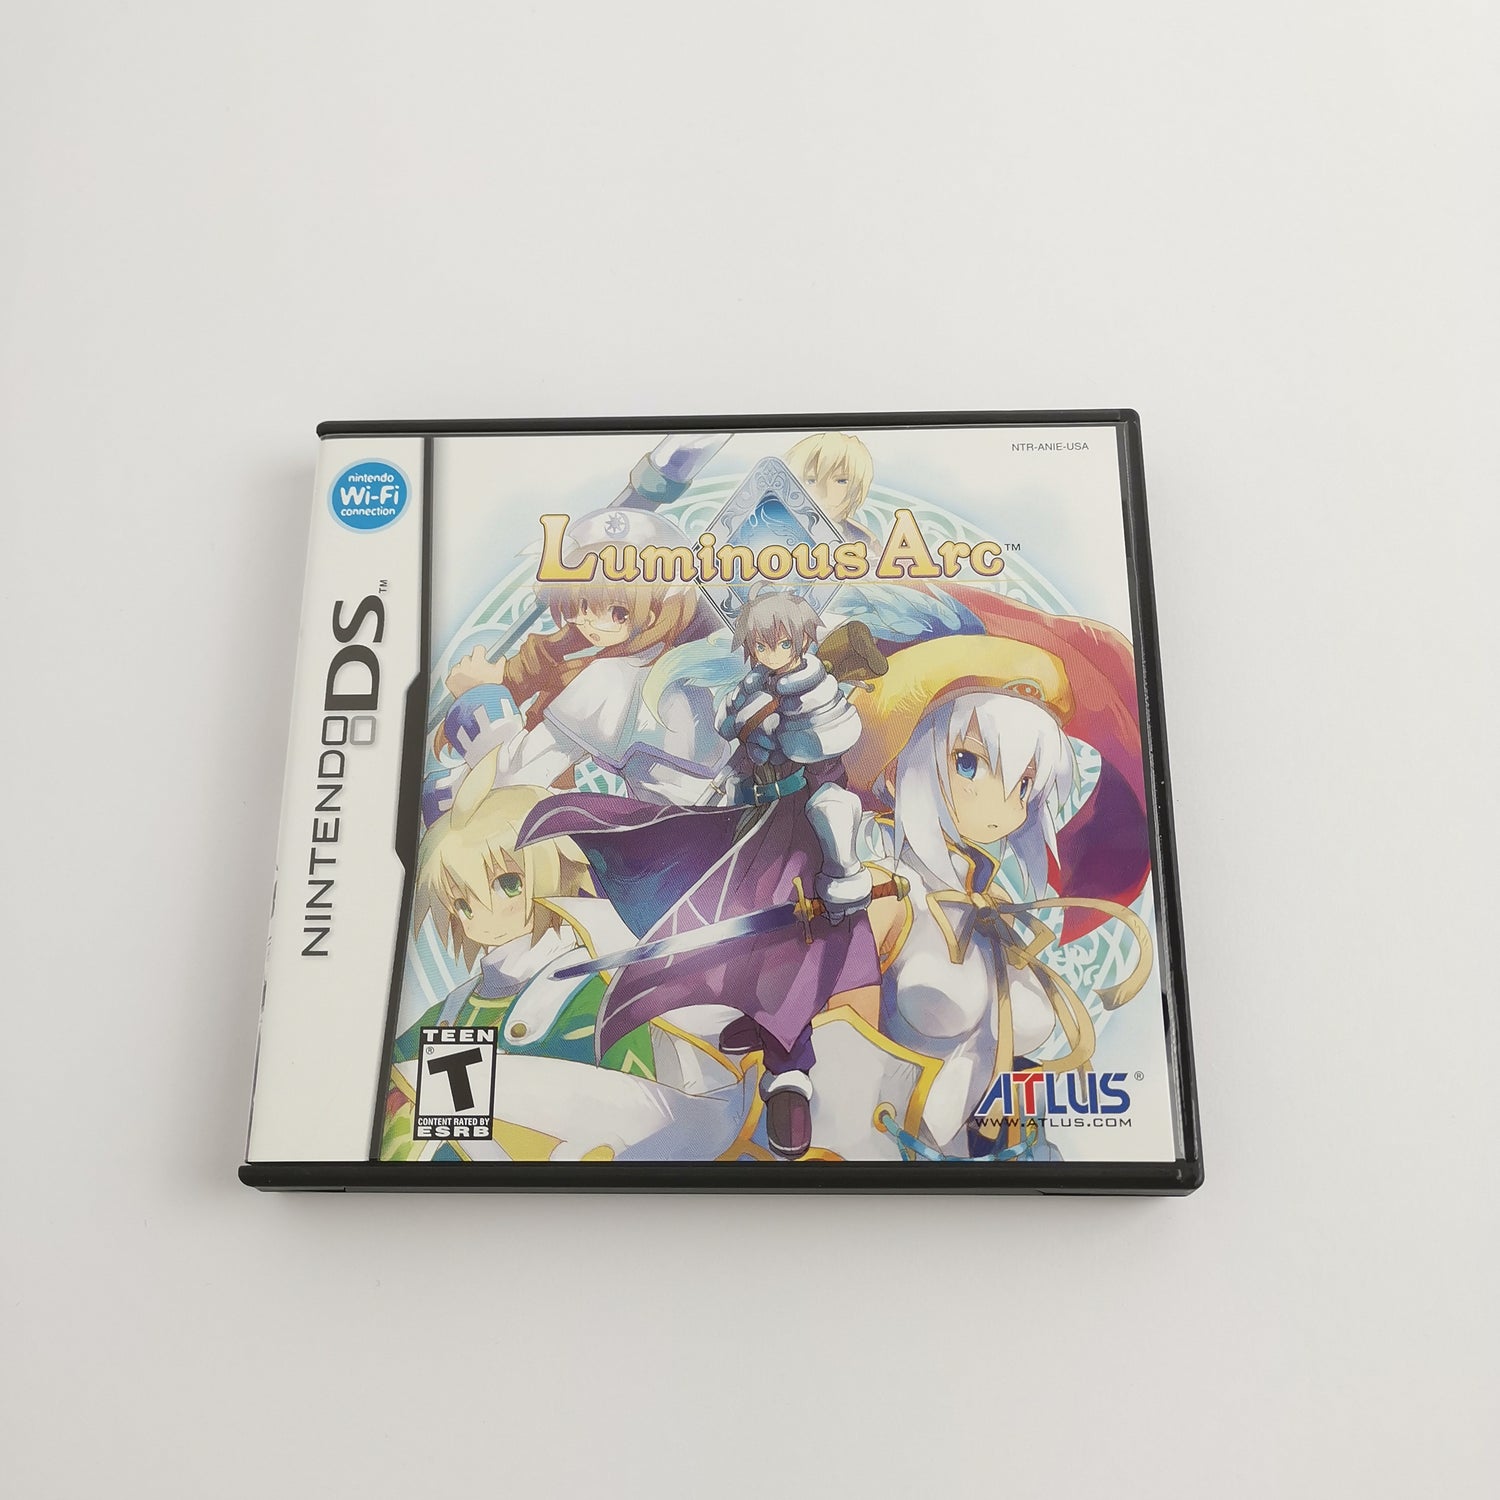 Nintendo DS Spiel : Luminous Arc | 2DS 3DS kompatibel - OVP NTSC-U/C USA